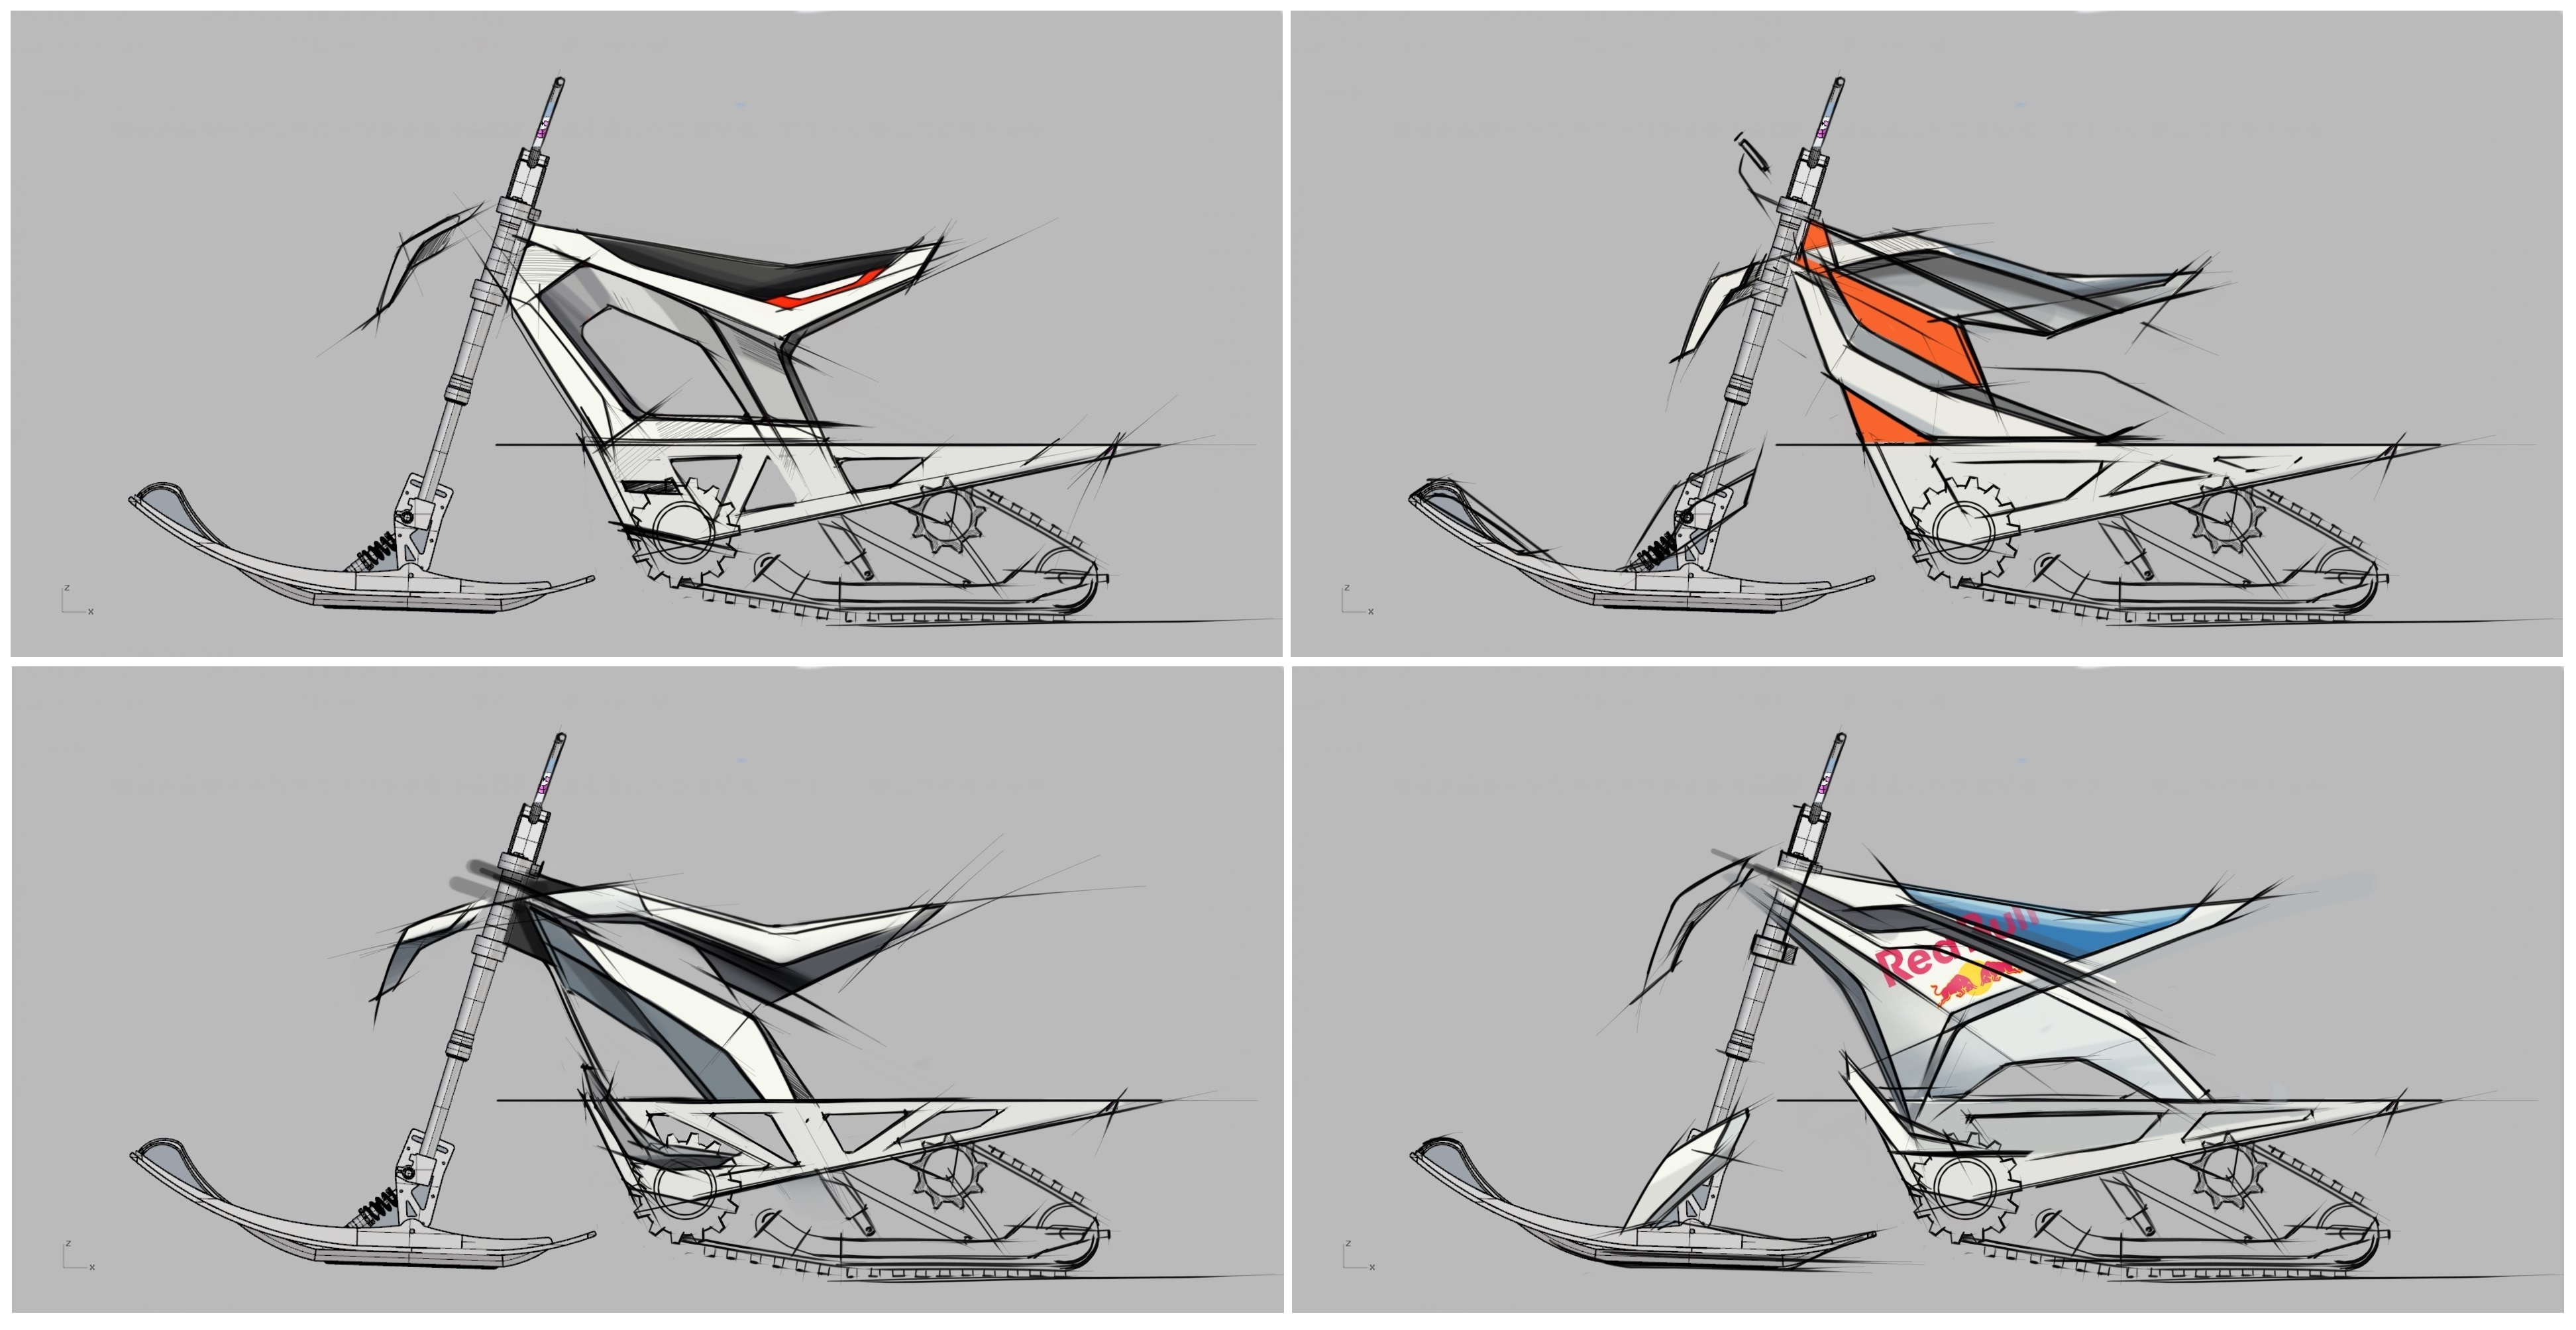 Sniejik - Electric snowmobile, light all-terrain vehicle 